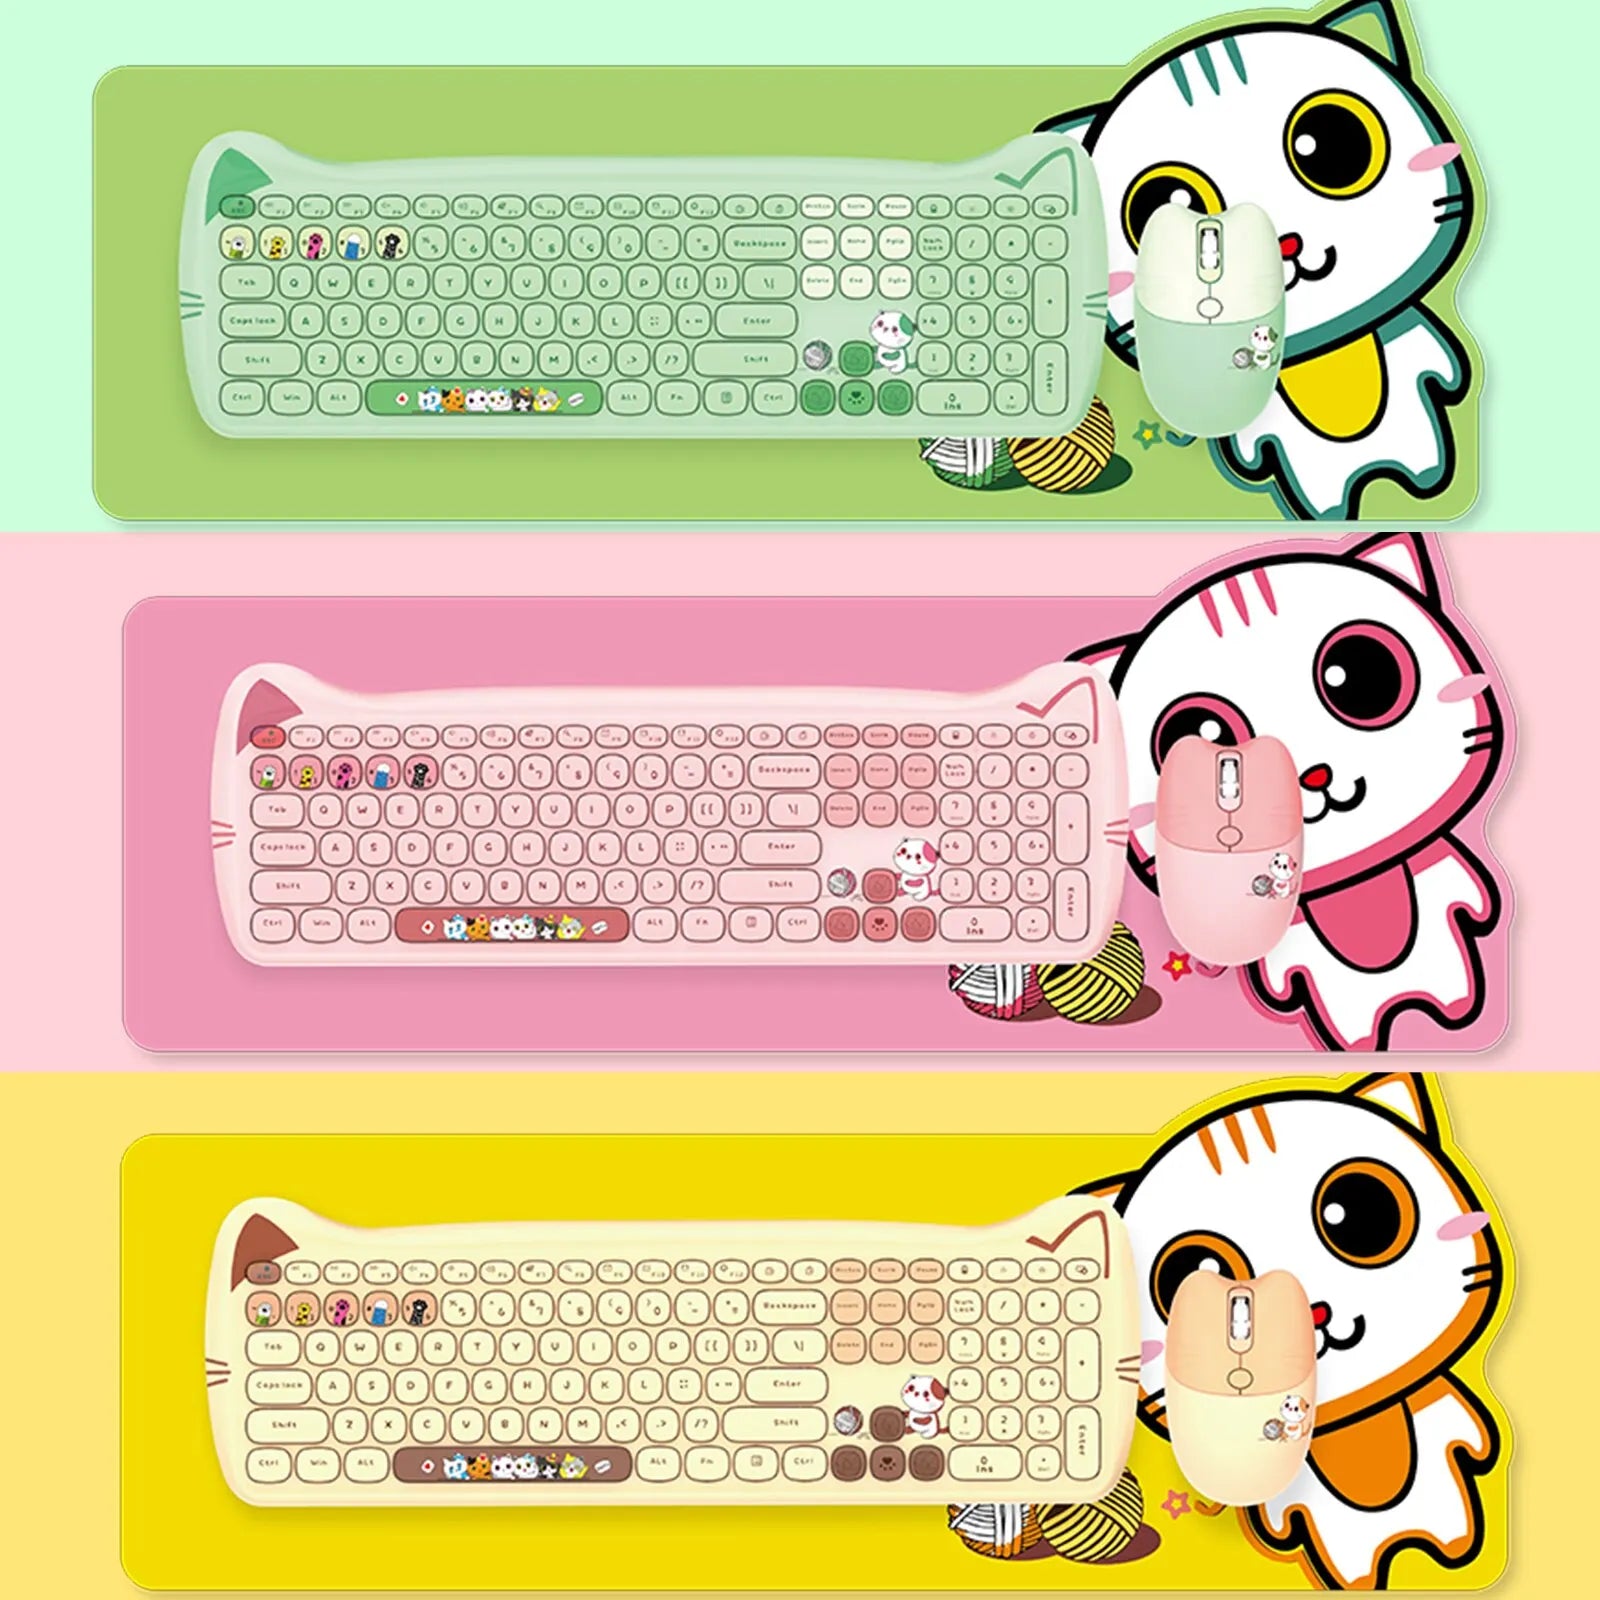 Kitty Kat Wireless Keyboard and Mouse Set